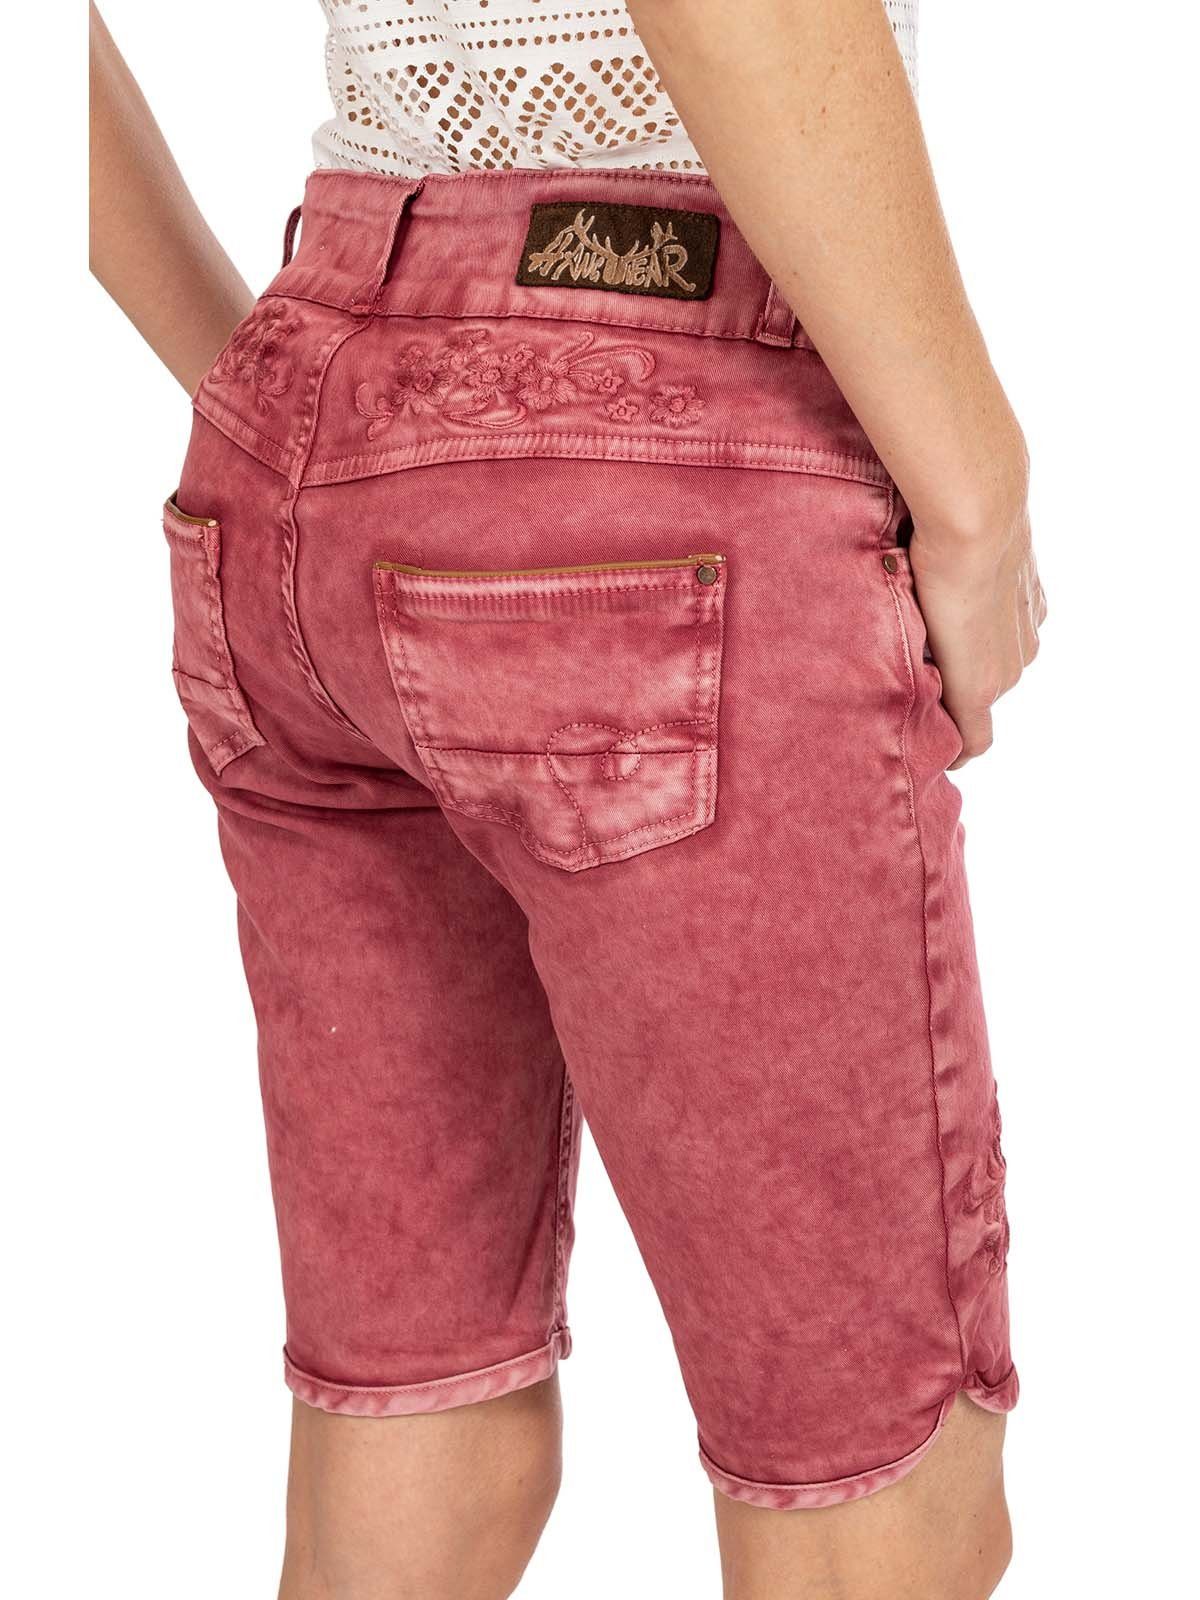 OVIDA weinrot Bermuda Trachtenhose Hangowear Jeans